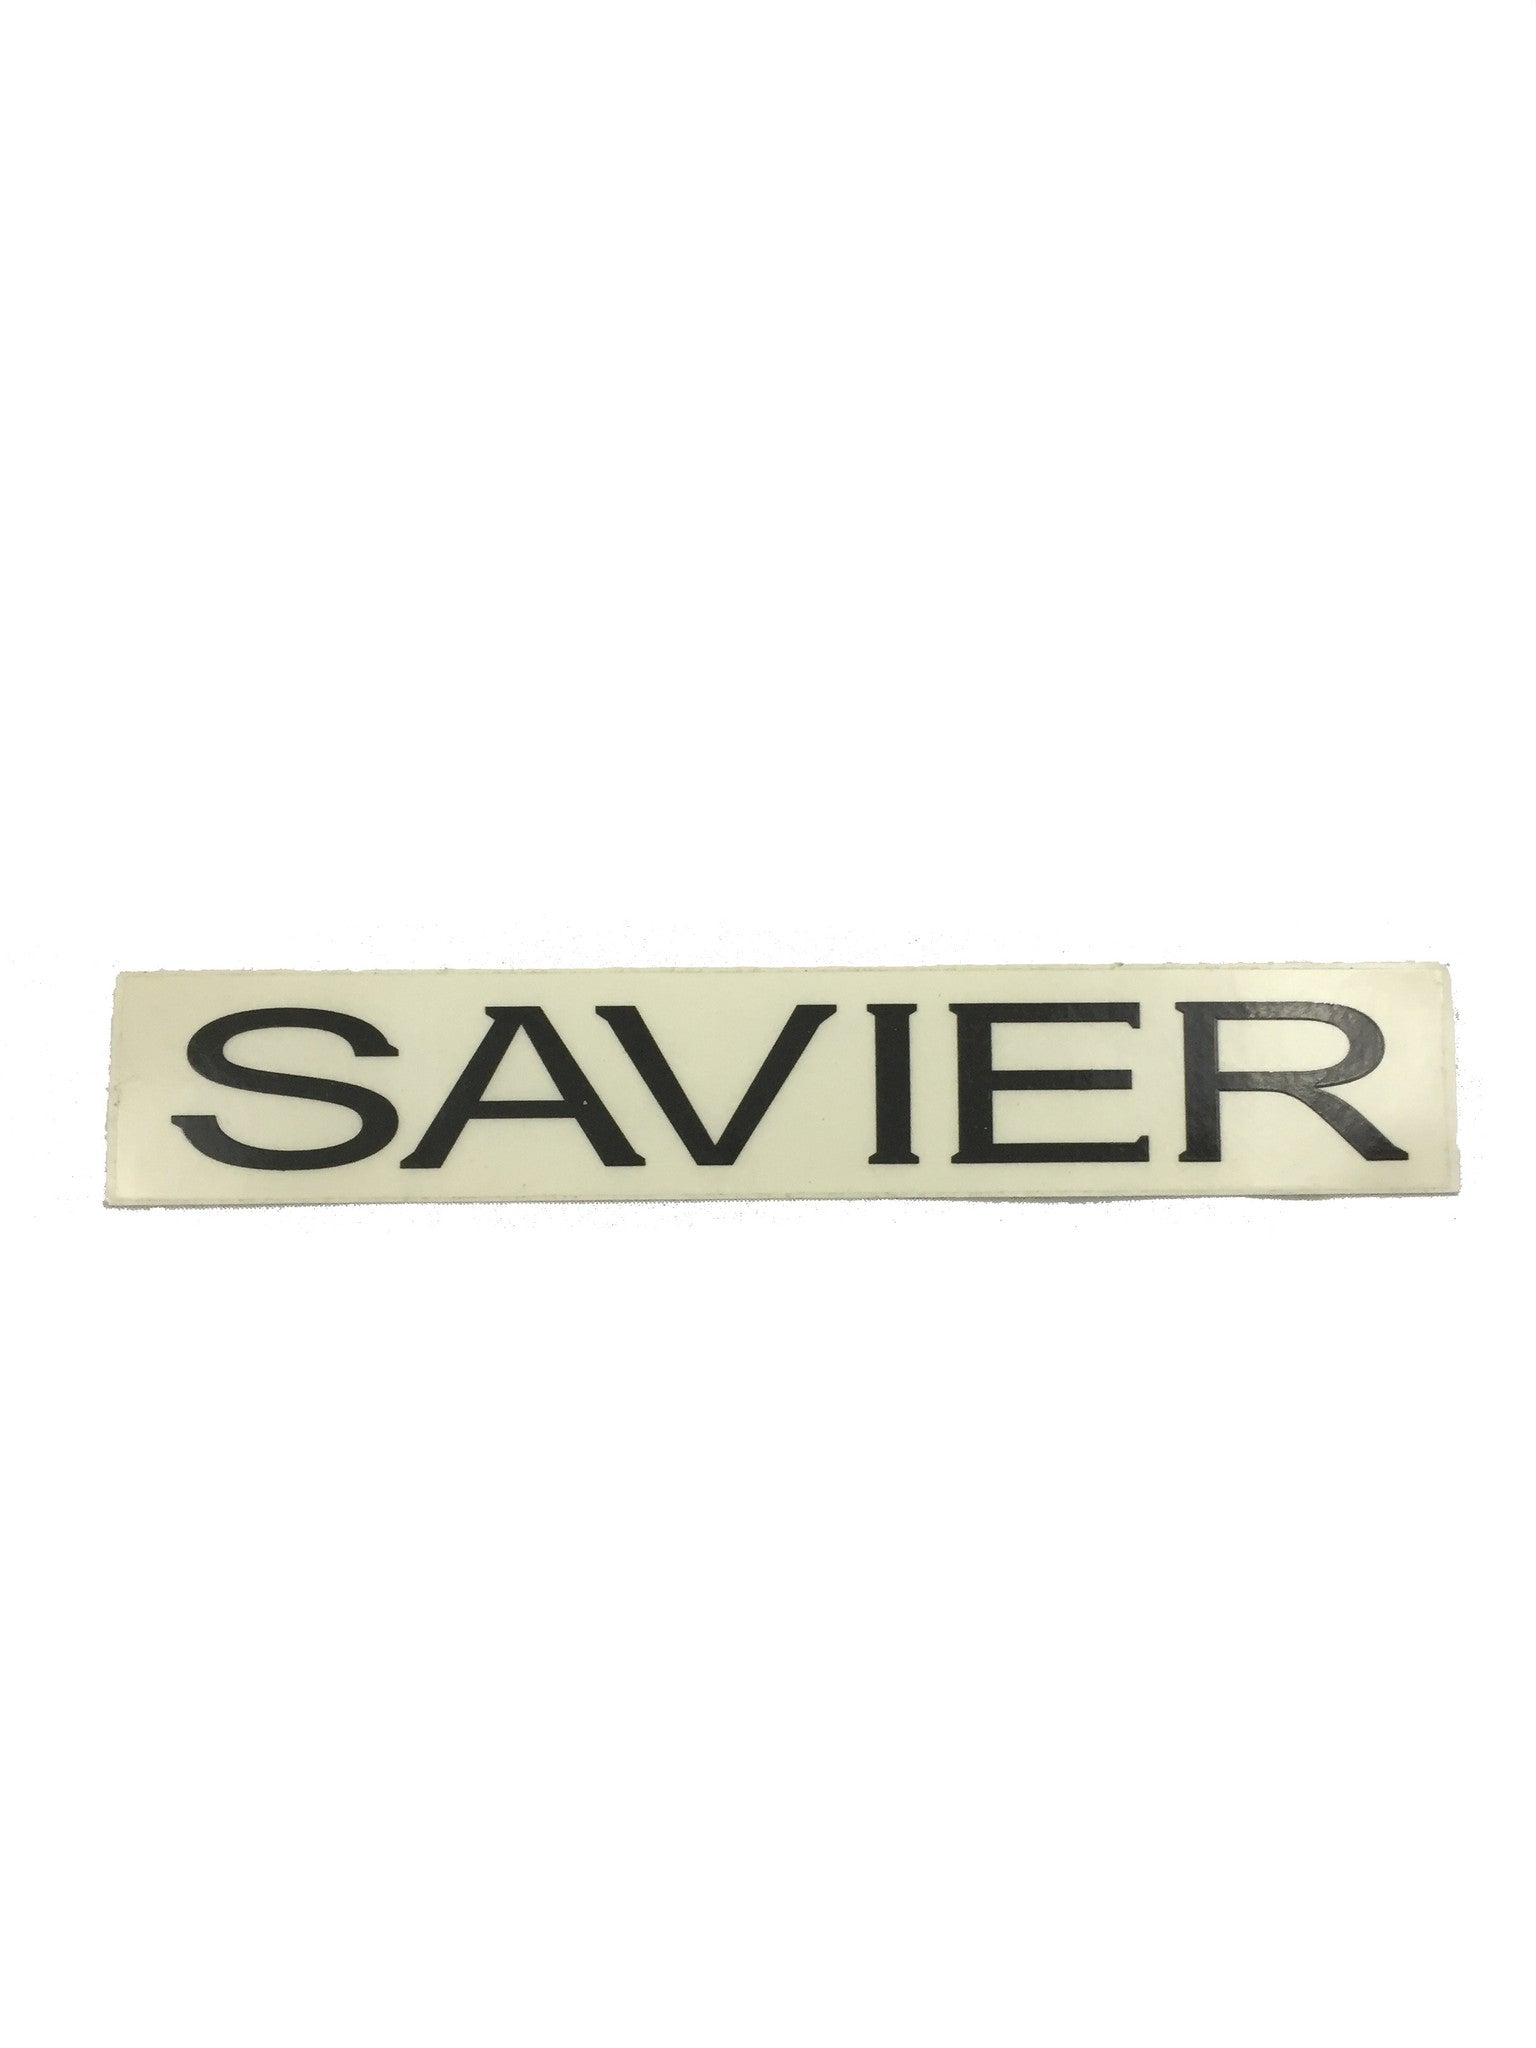 Savier - Savier Sticker